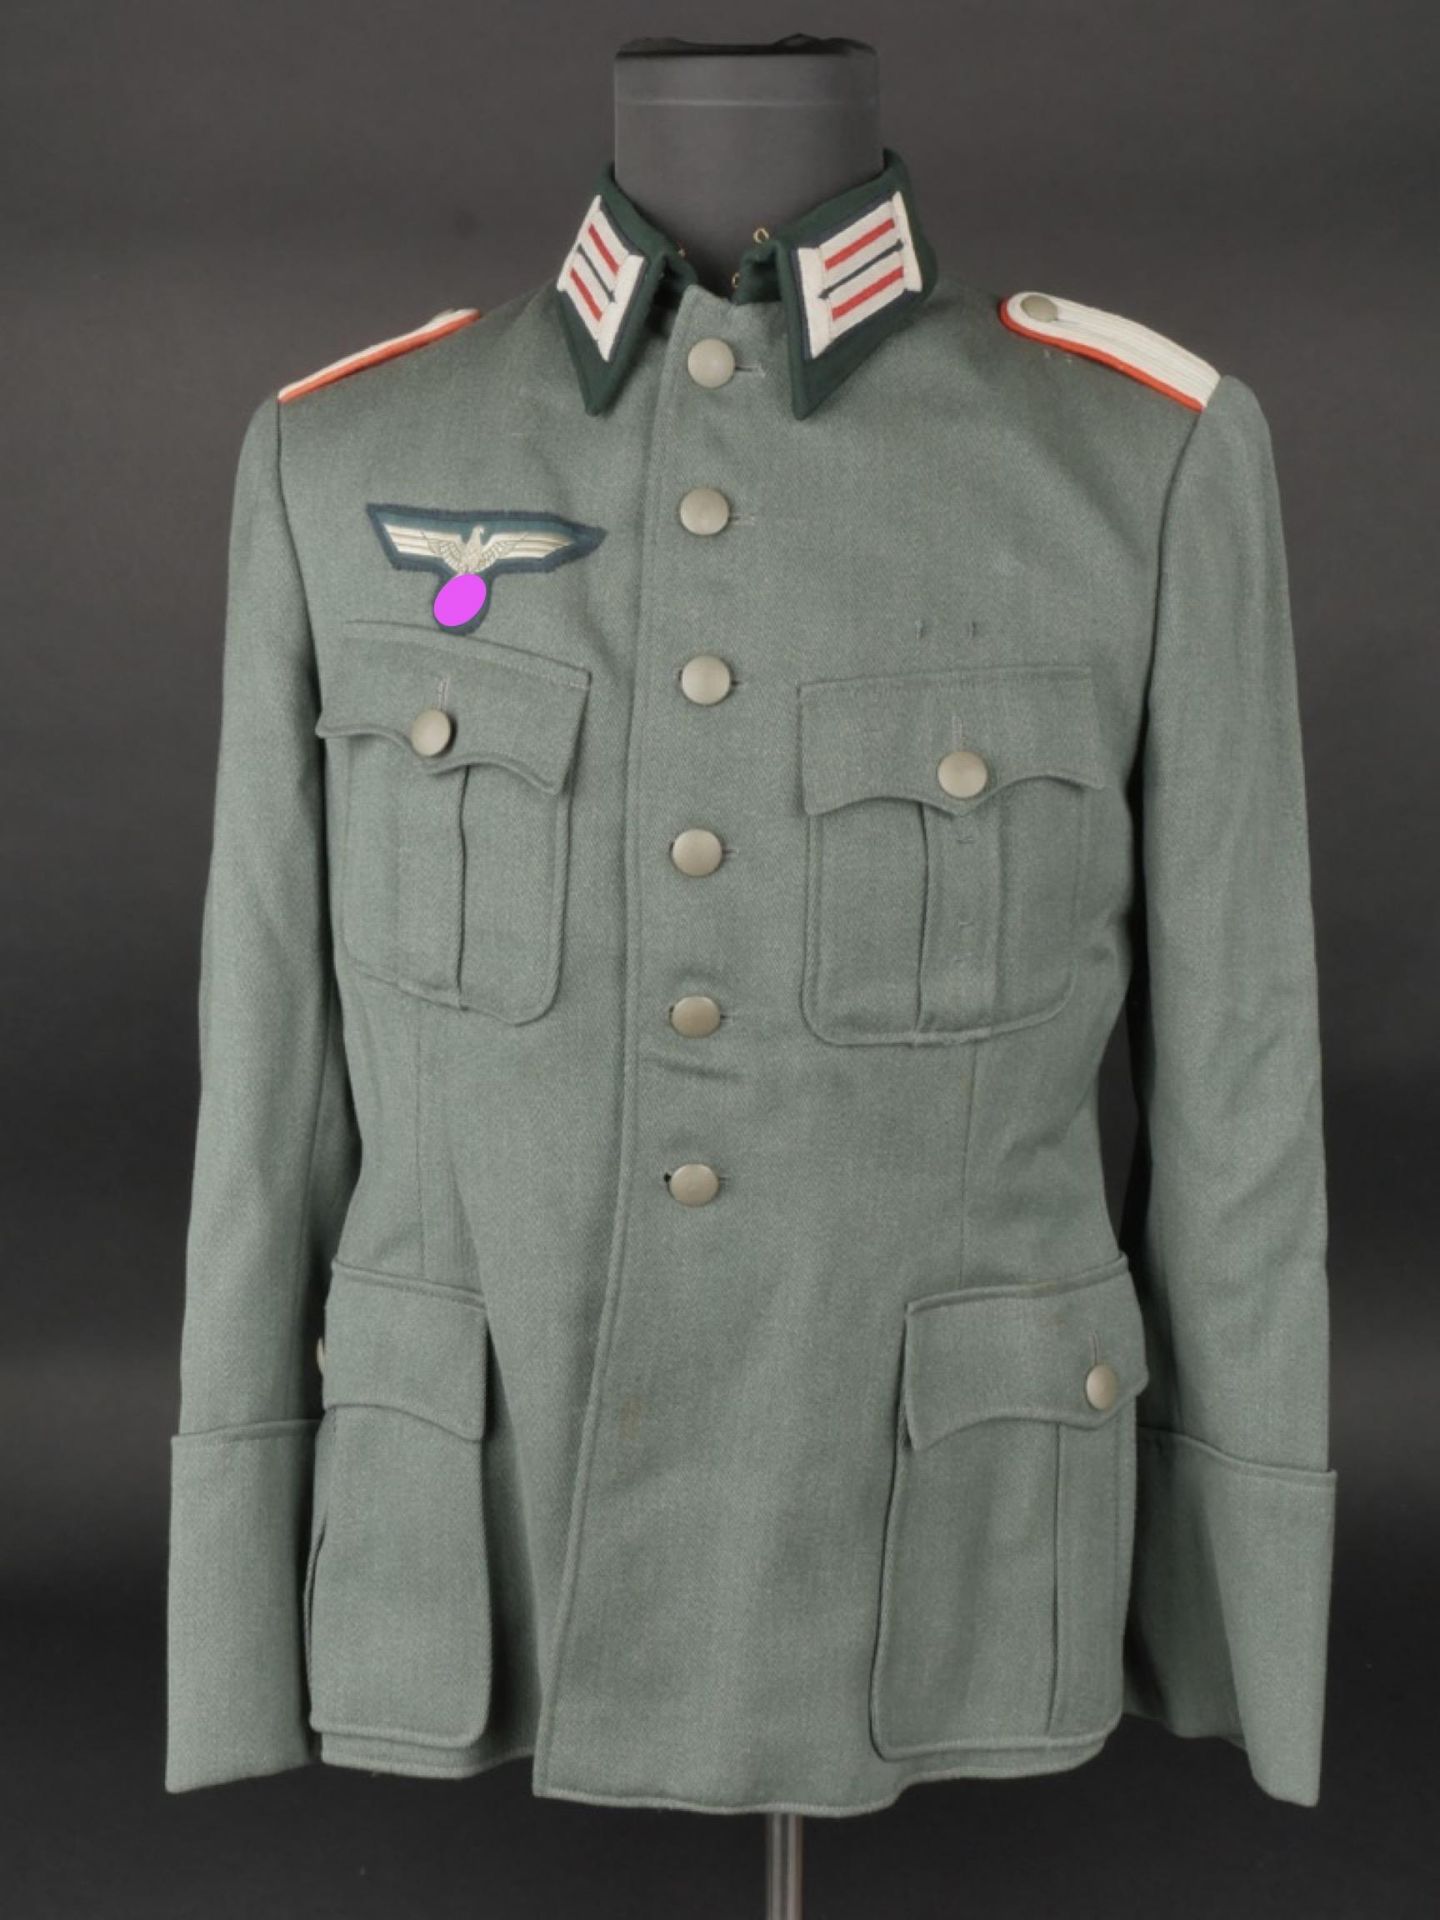 Vareuse officier Heer. Heer officer jacket. 